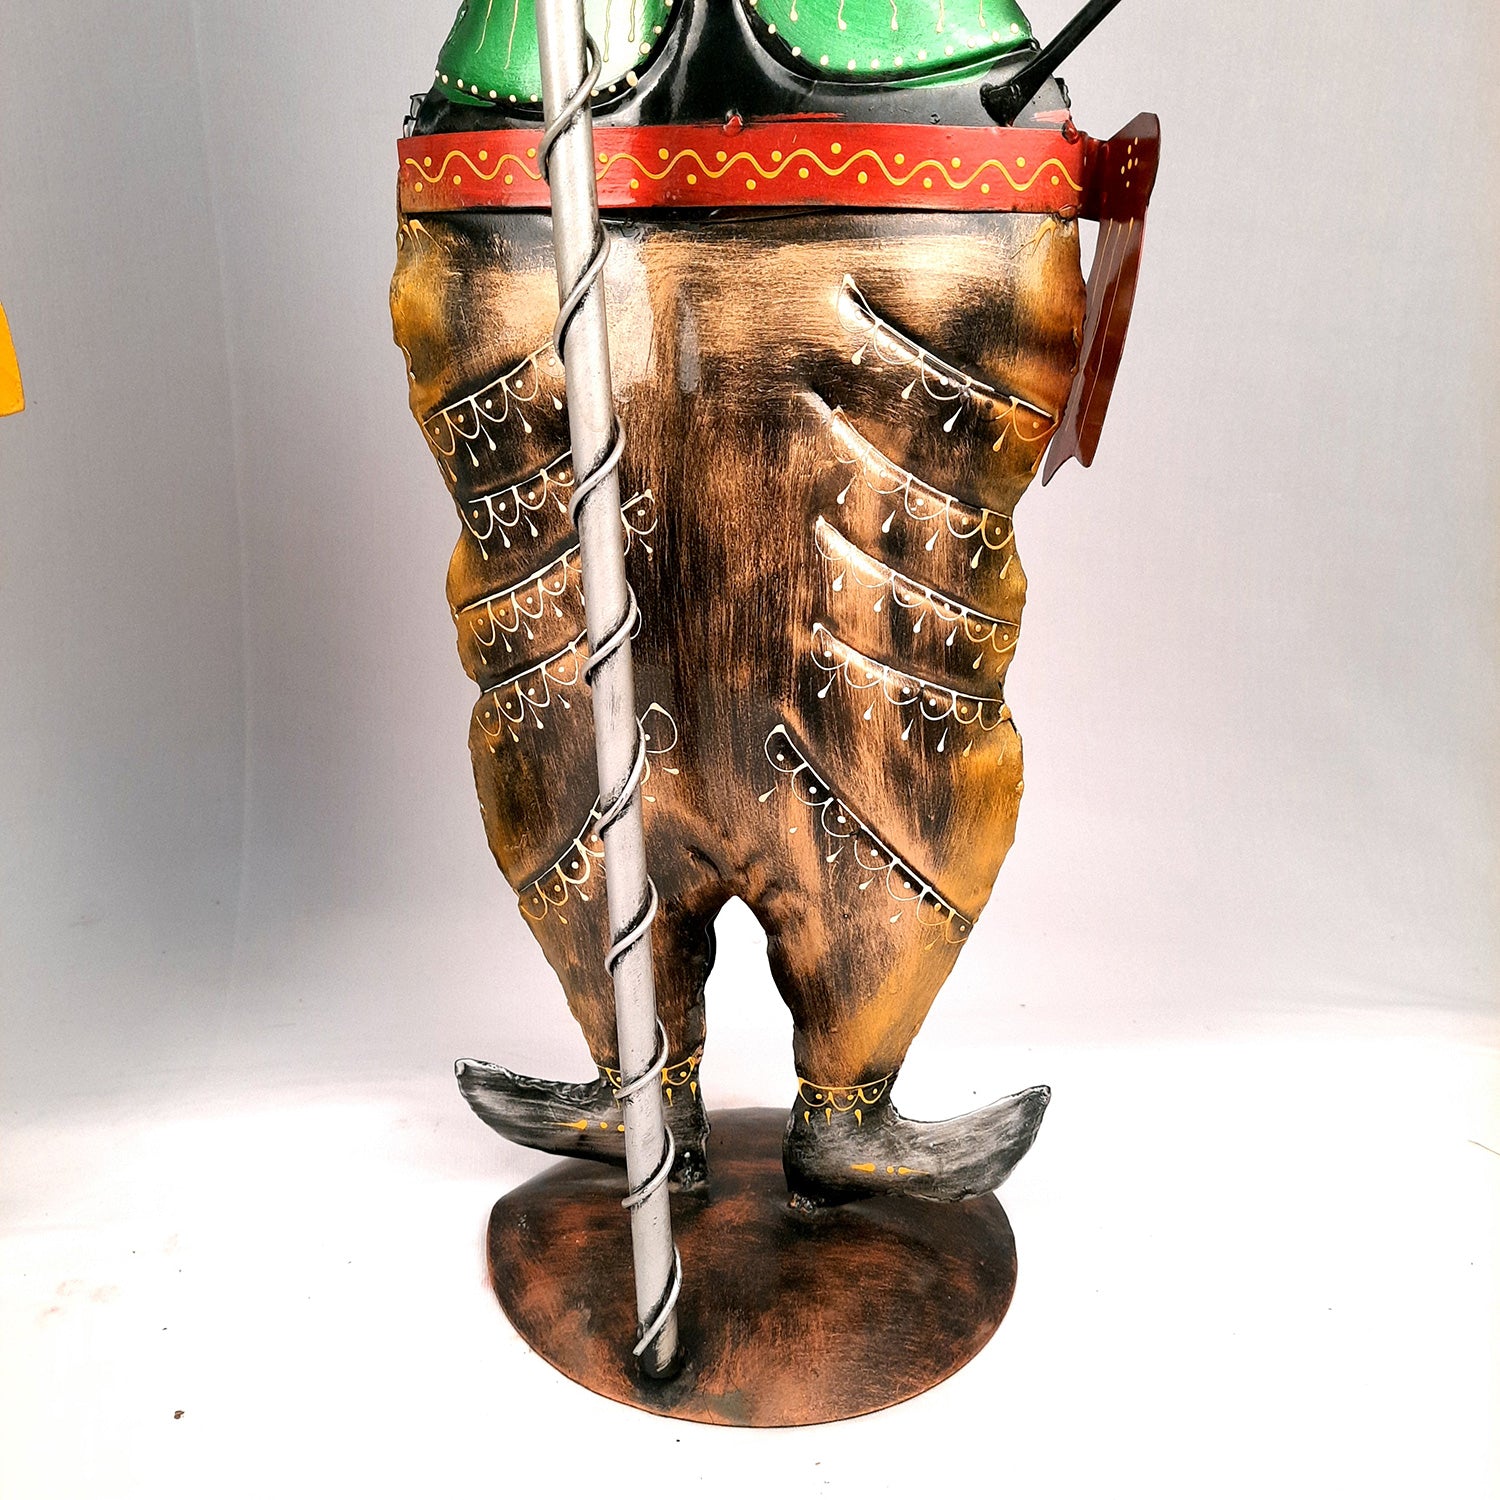 Rajasthani Darban Showpiece Set - Holding Lantern & Stick | Big Darbaan Wearing Pagdi Figurines - For Home, Living Room, Entrance, Corner Decor & Gifts - 28 Inch (Set of 2) - Apkamart